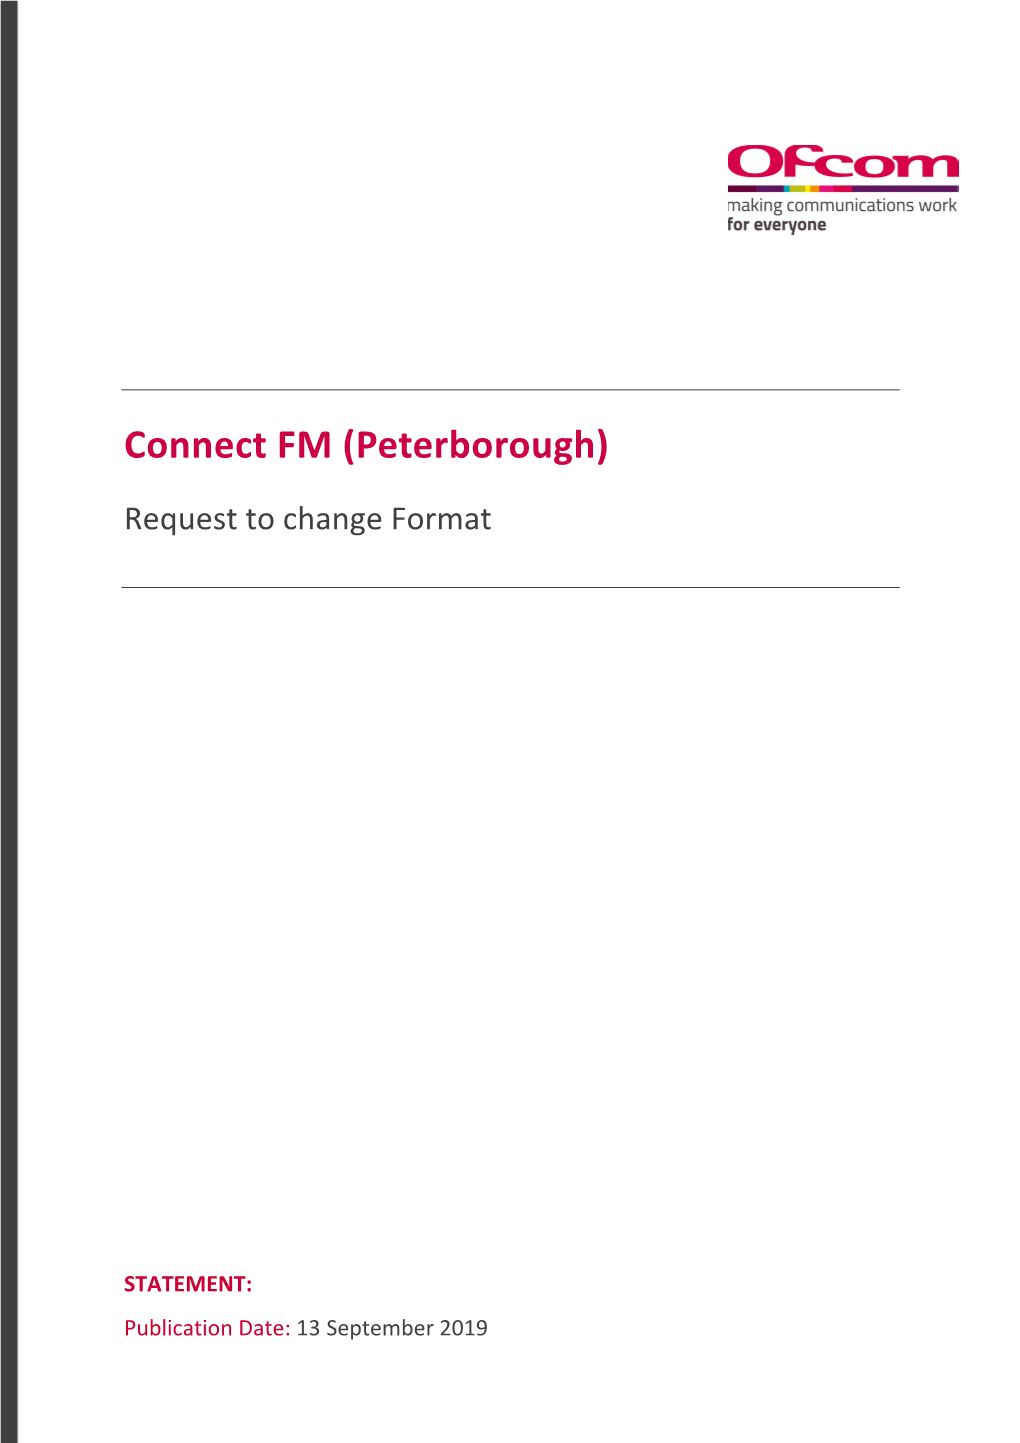 Connect FM (Peterborough) Request to Change Format